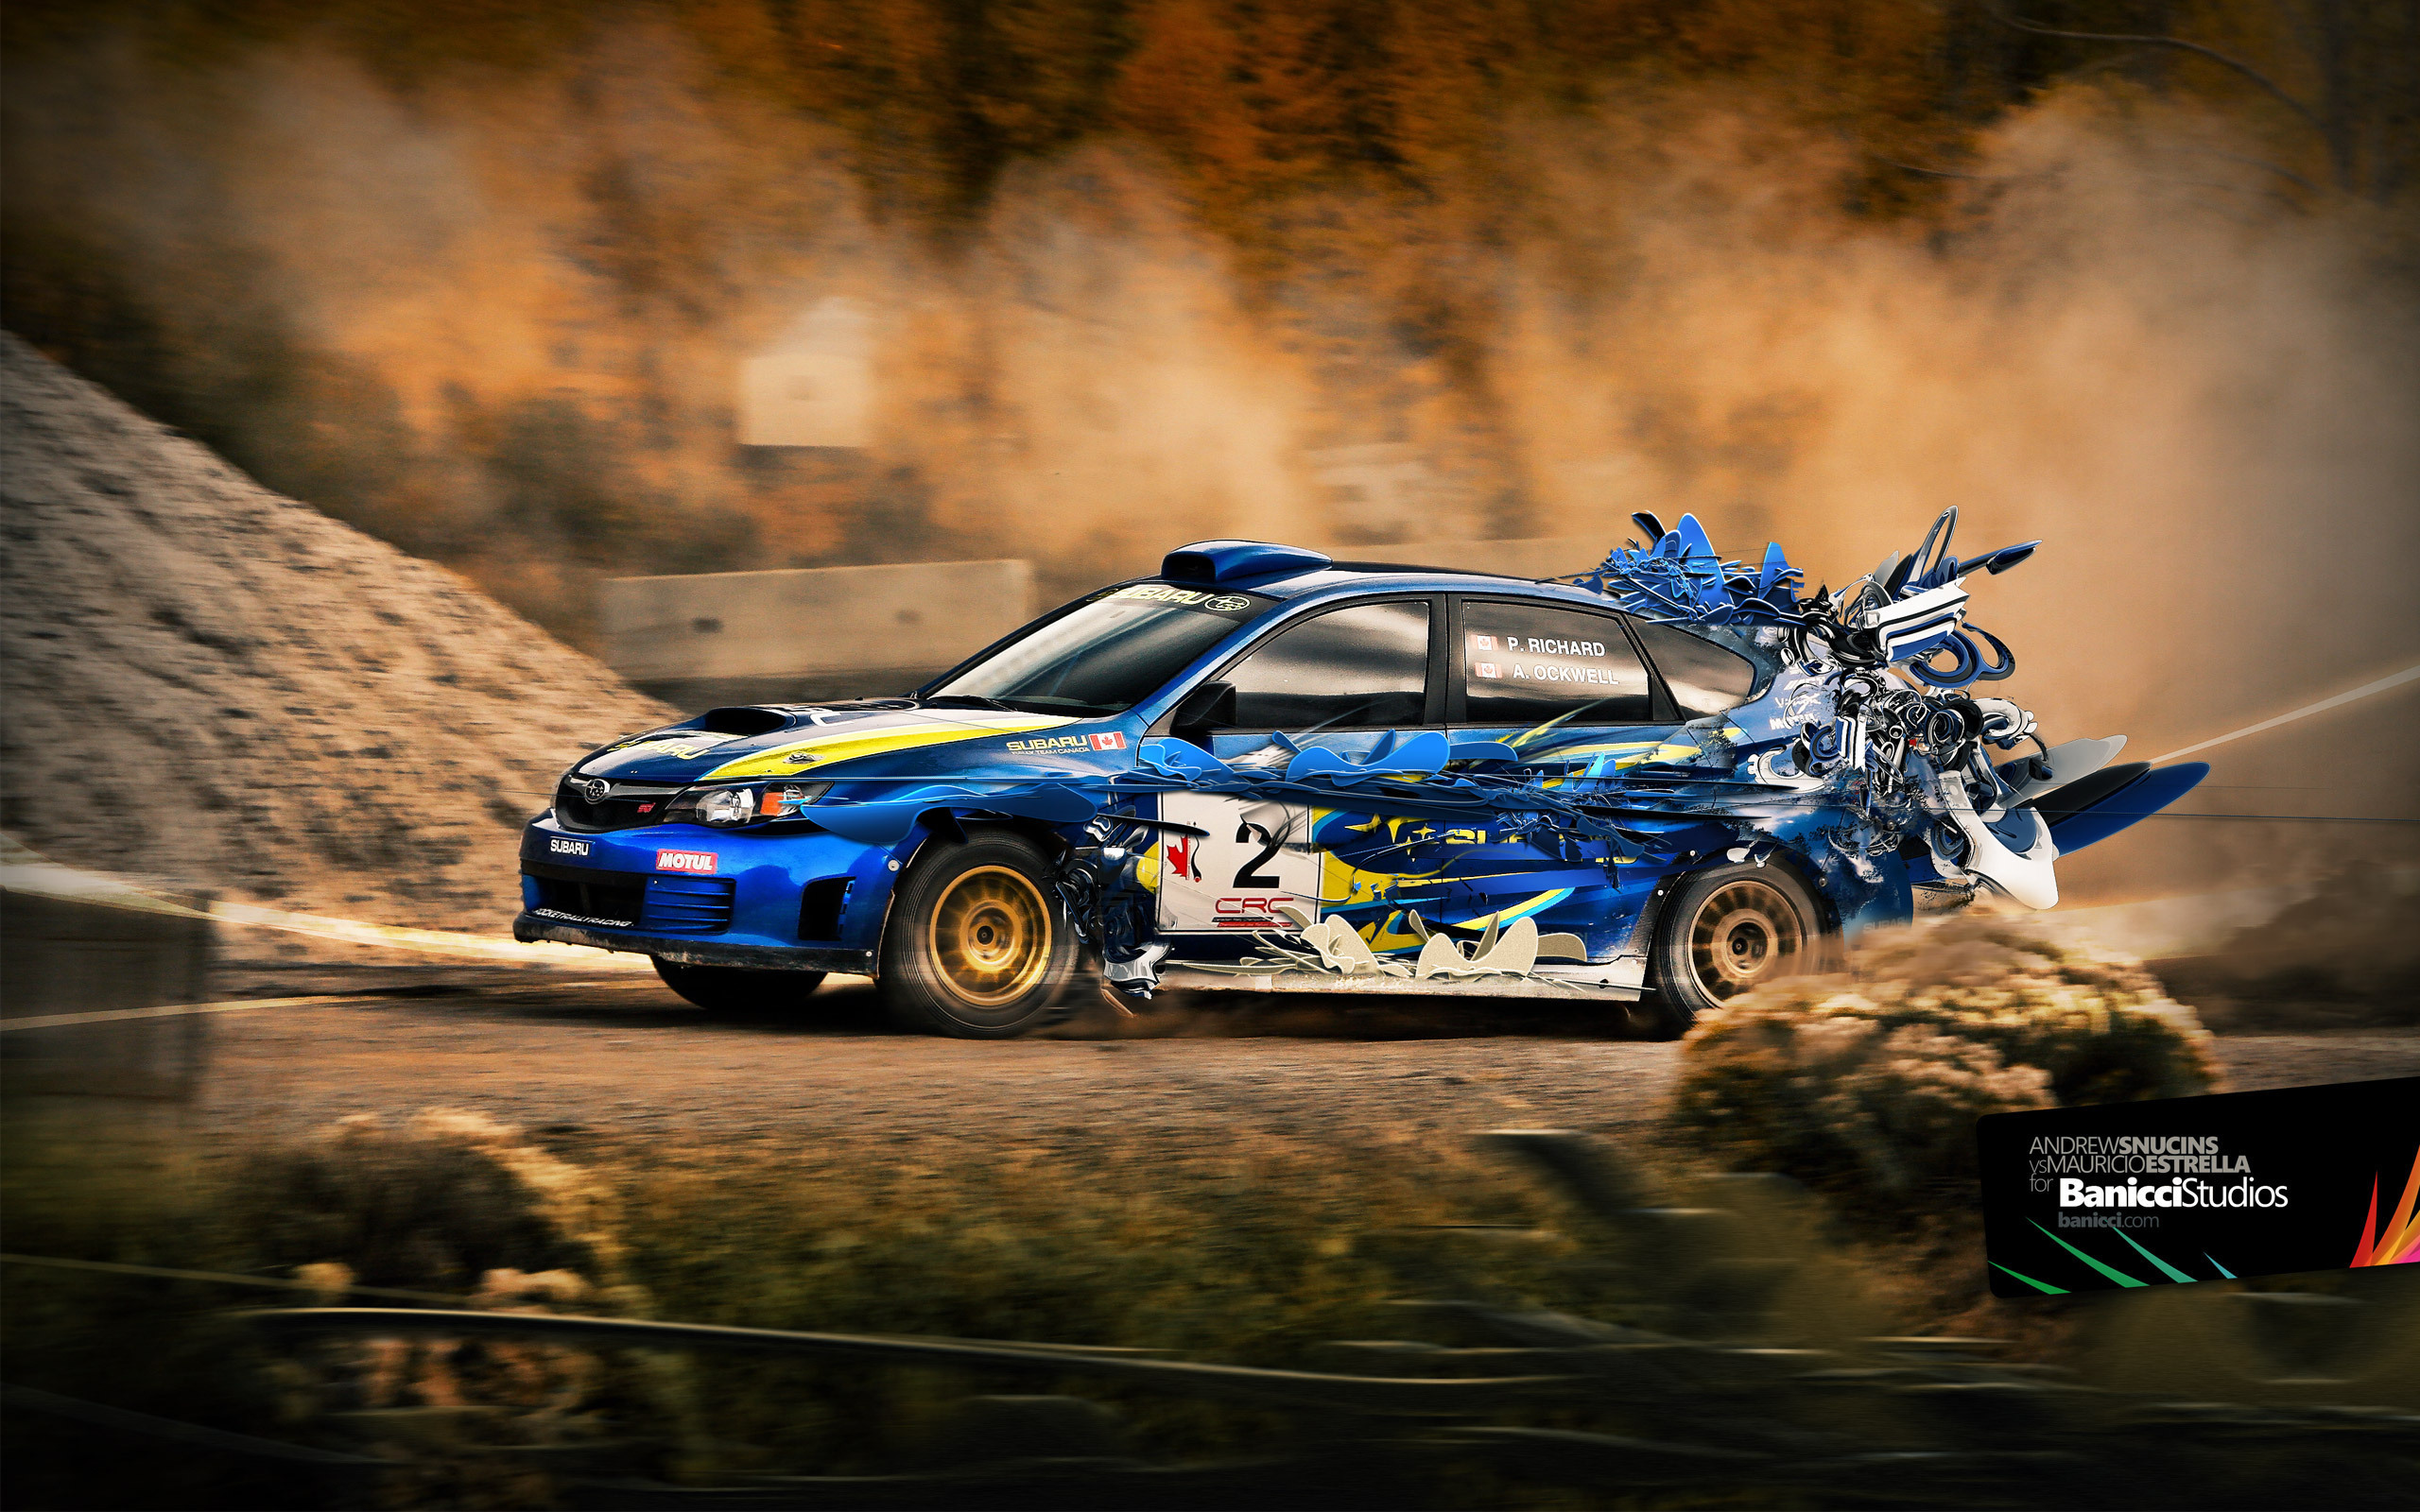 Vehicles Subaru Impreza HD Wallpaper | Background Image